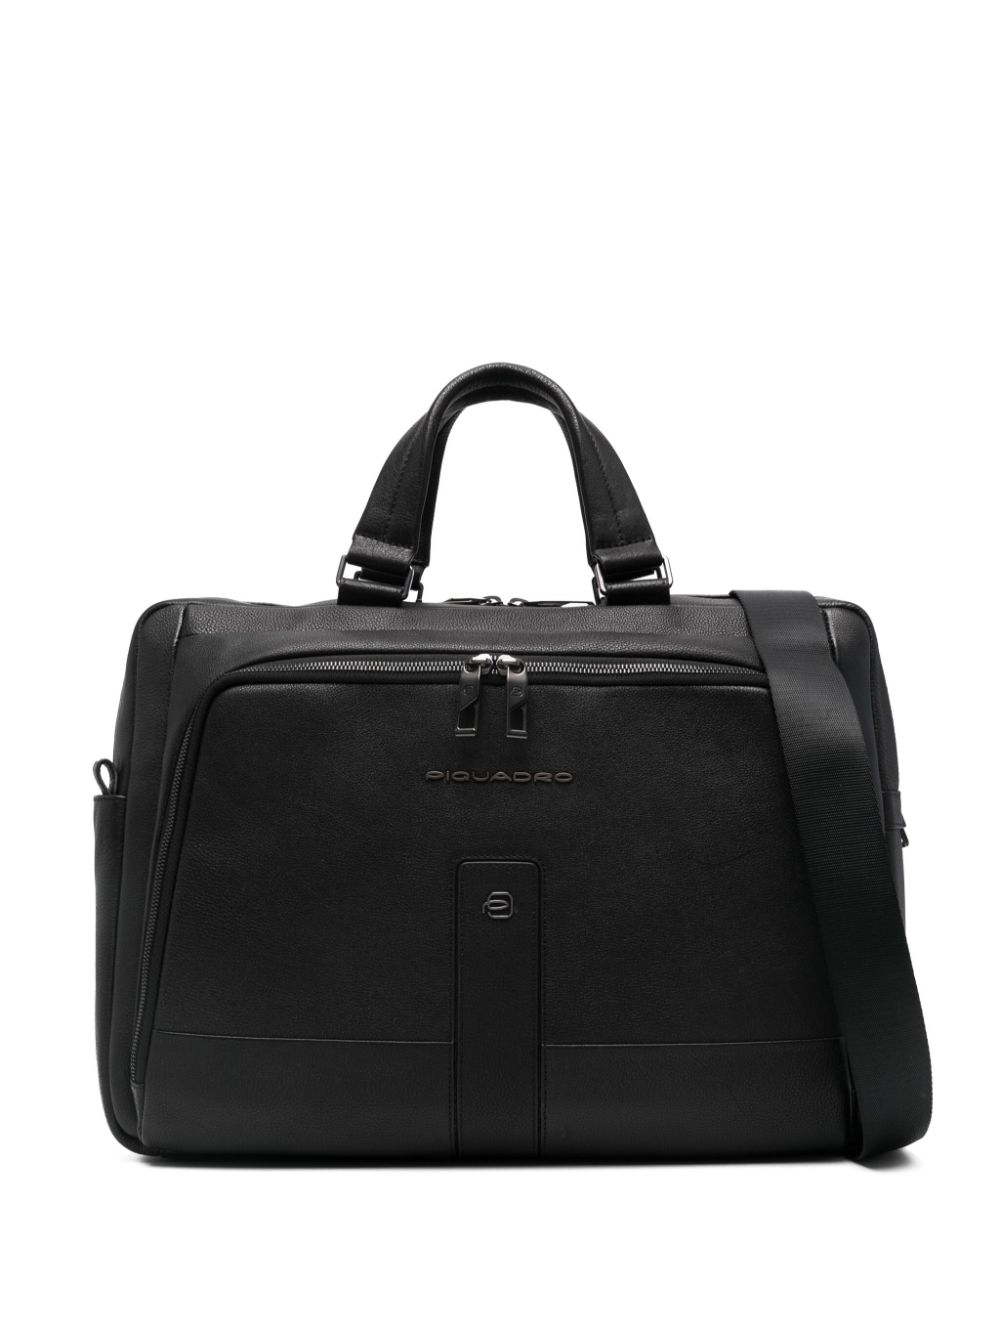 PIQUADRO leather laptop bag (30cm x 42cm) Zwart